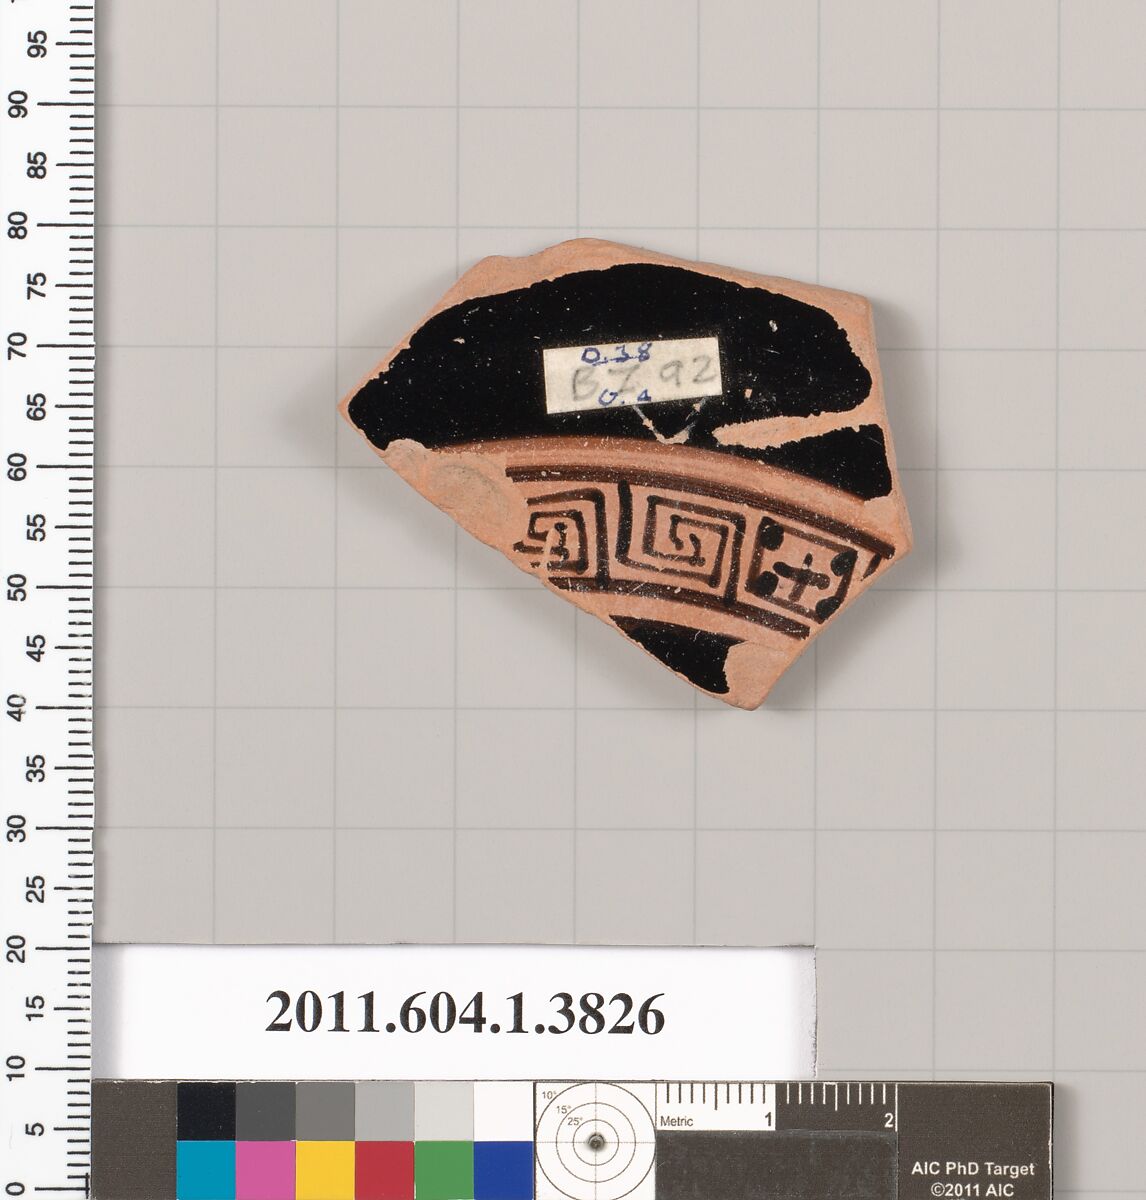 Terracotta fragment of a kylix (drinking cup), Terracotta, Greek, Attic 